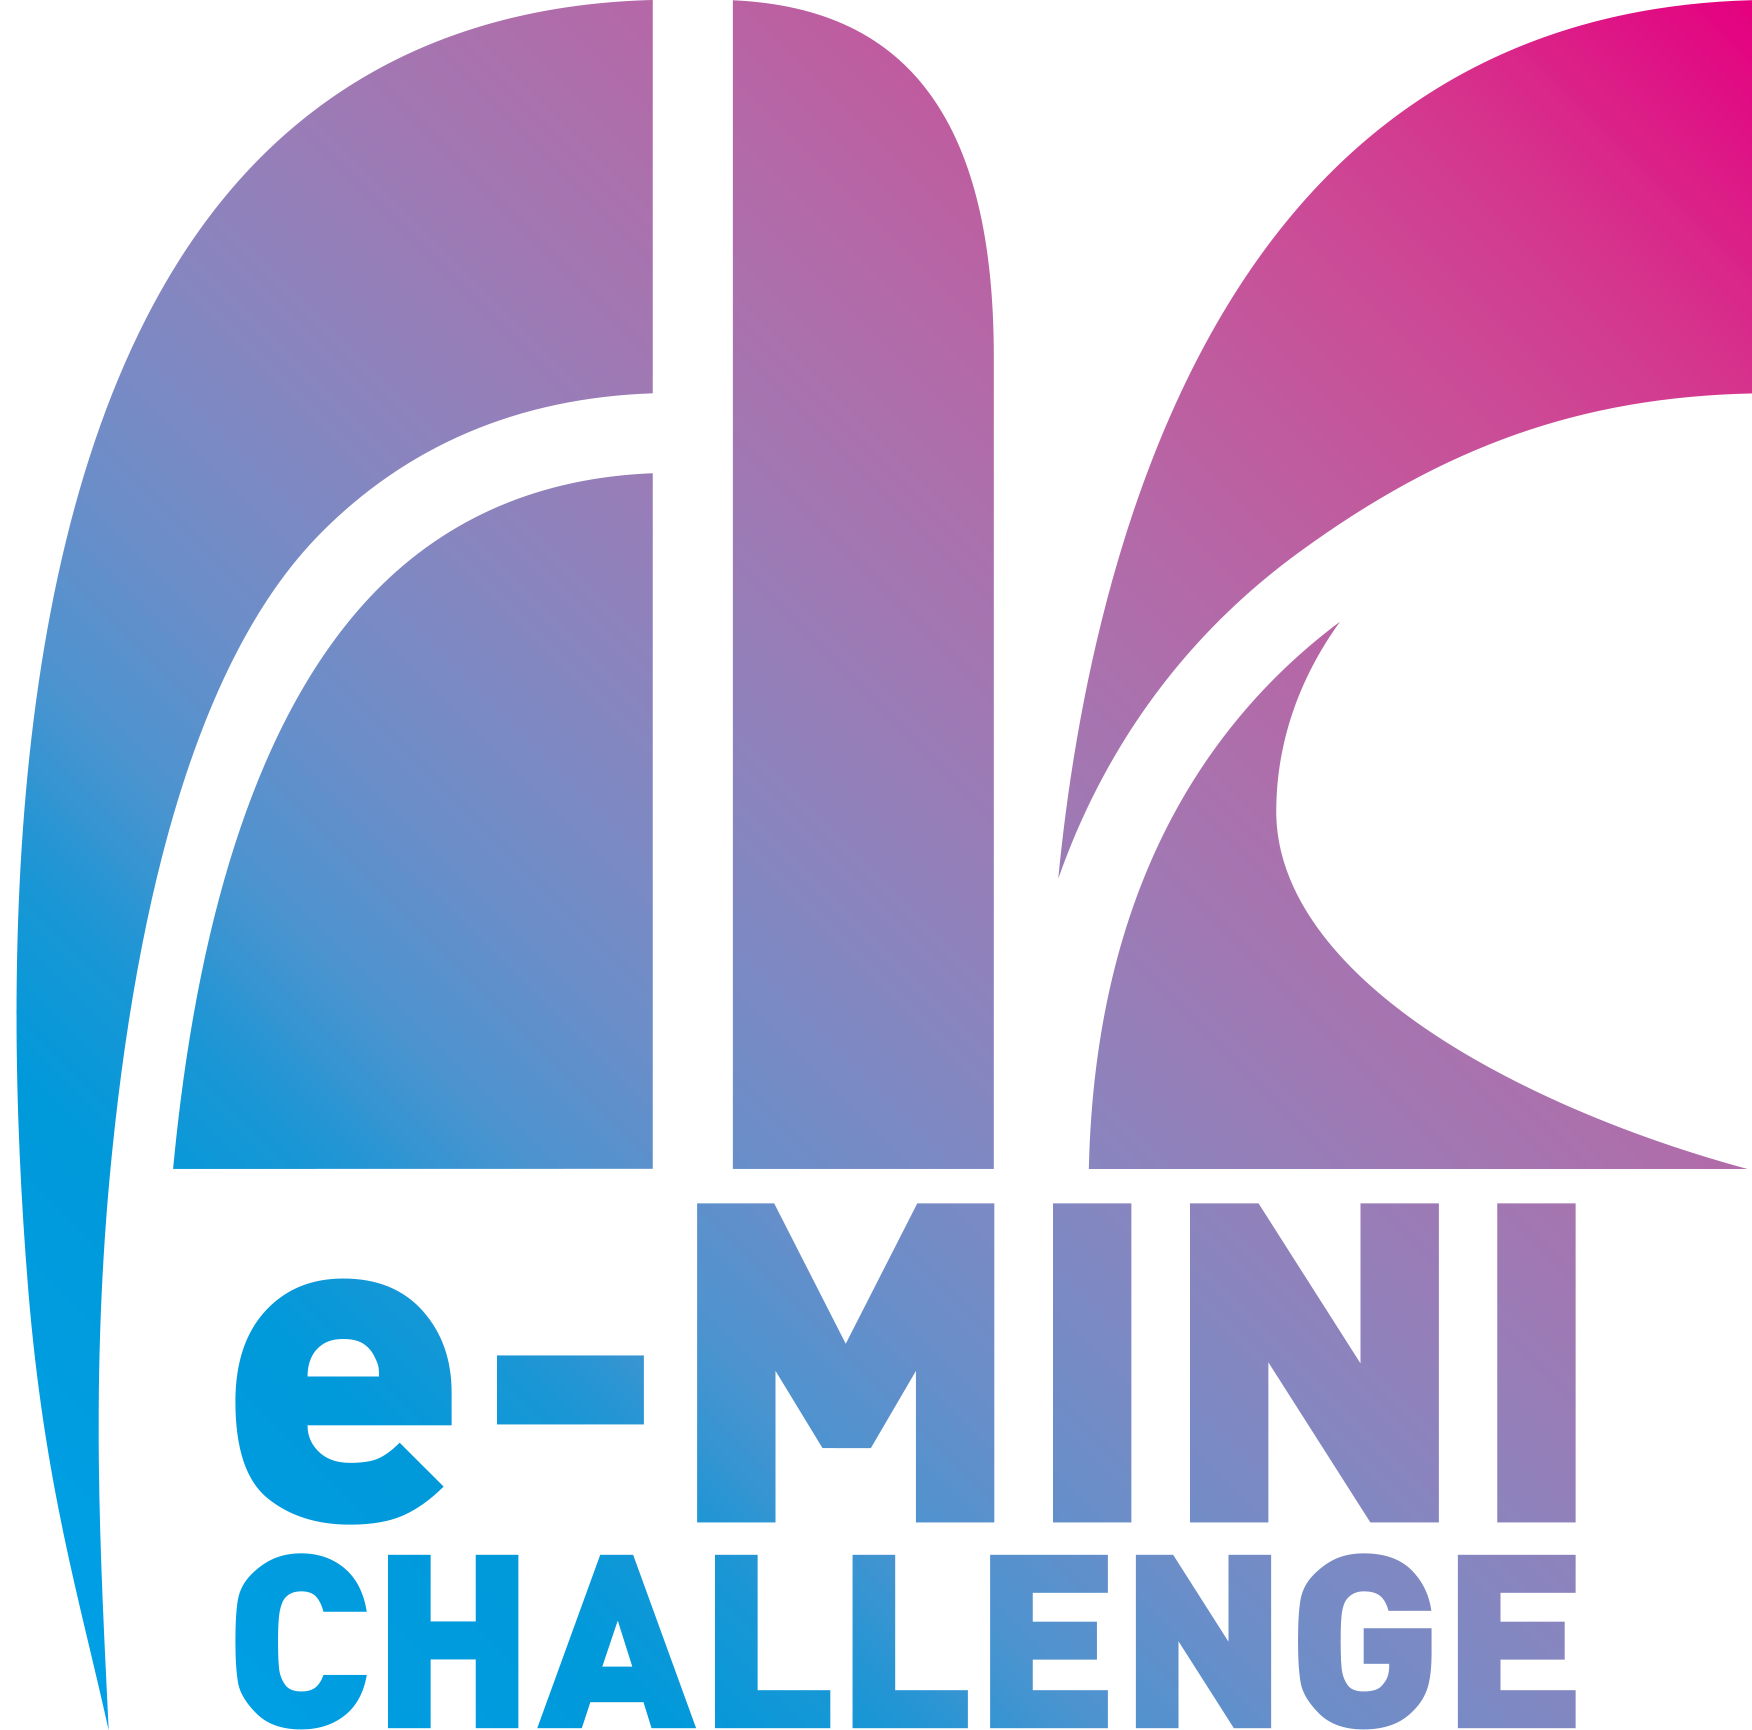 e-MINI CHALLENGE® 2020 S2 Rd.5 ポイントランキング更新